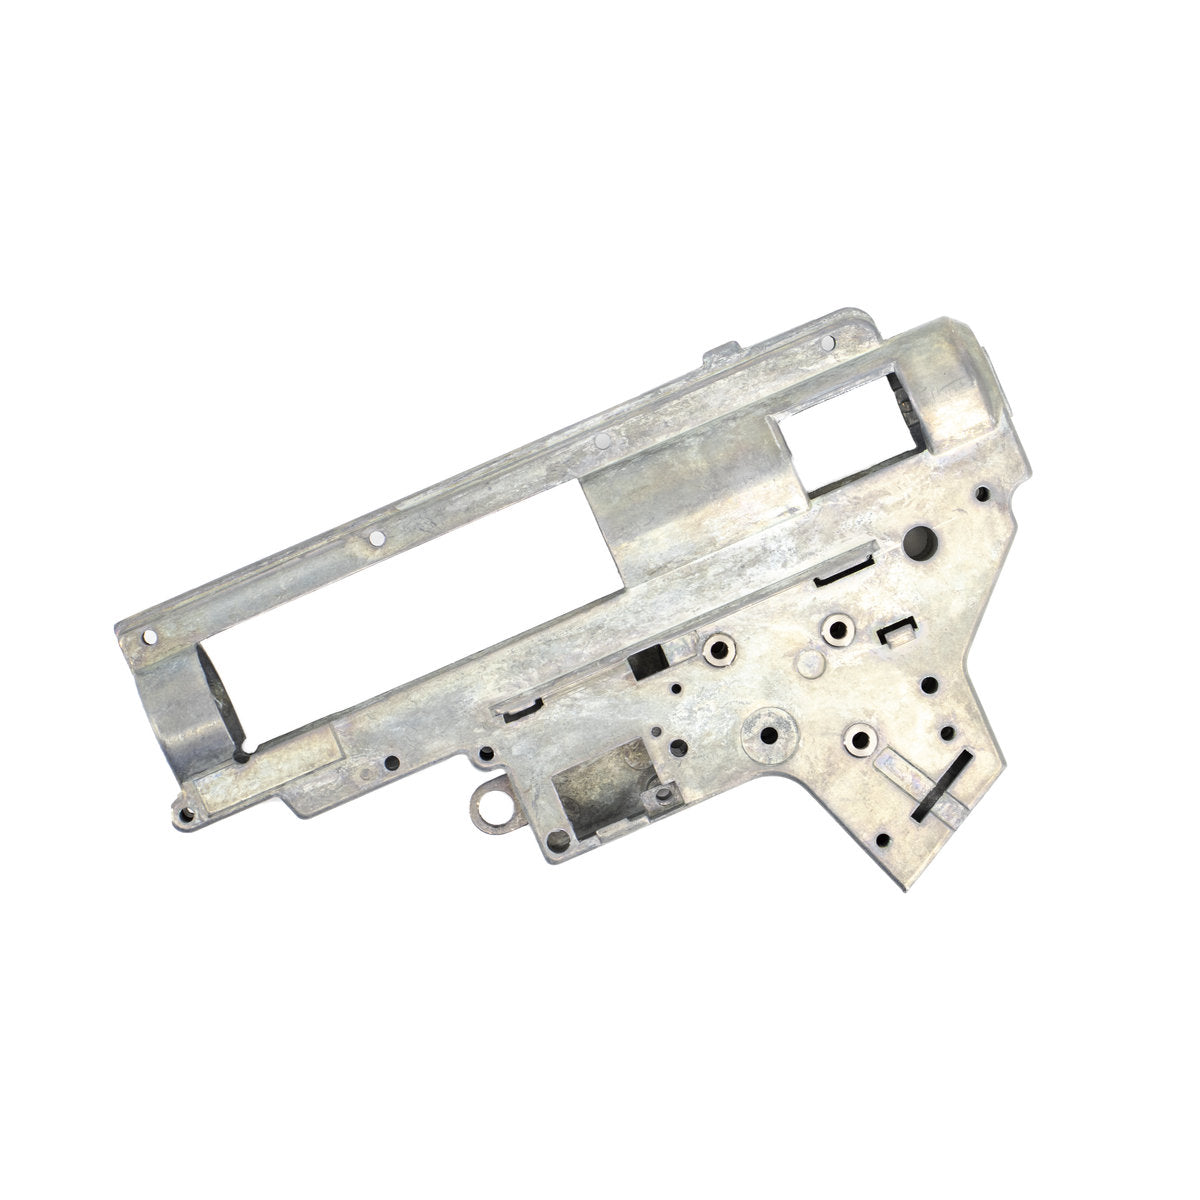 Rifle Parts - Valken Asl Gearbox Shells W/Bearings